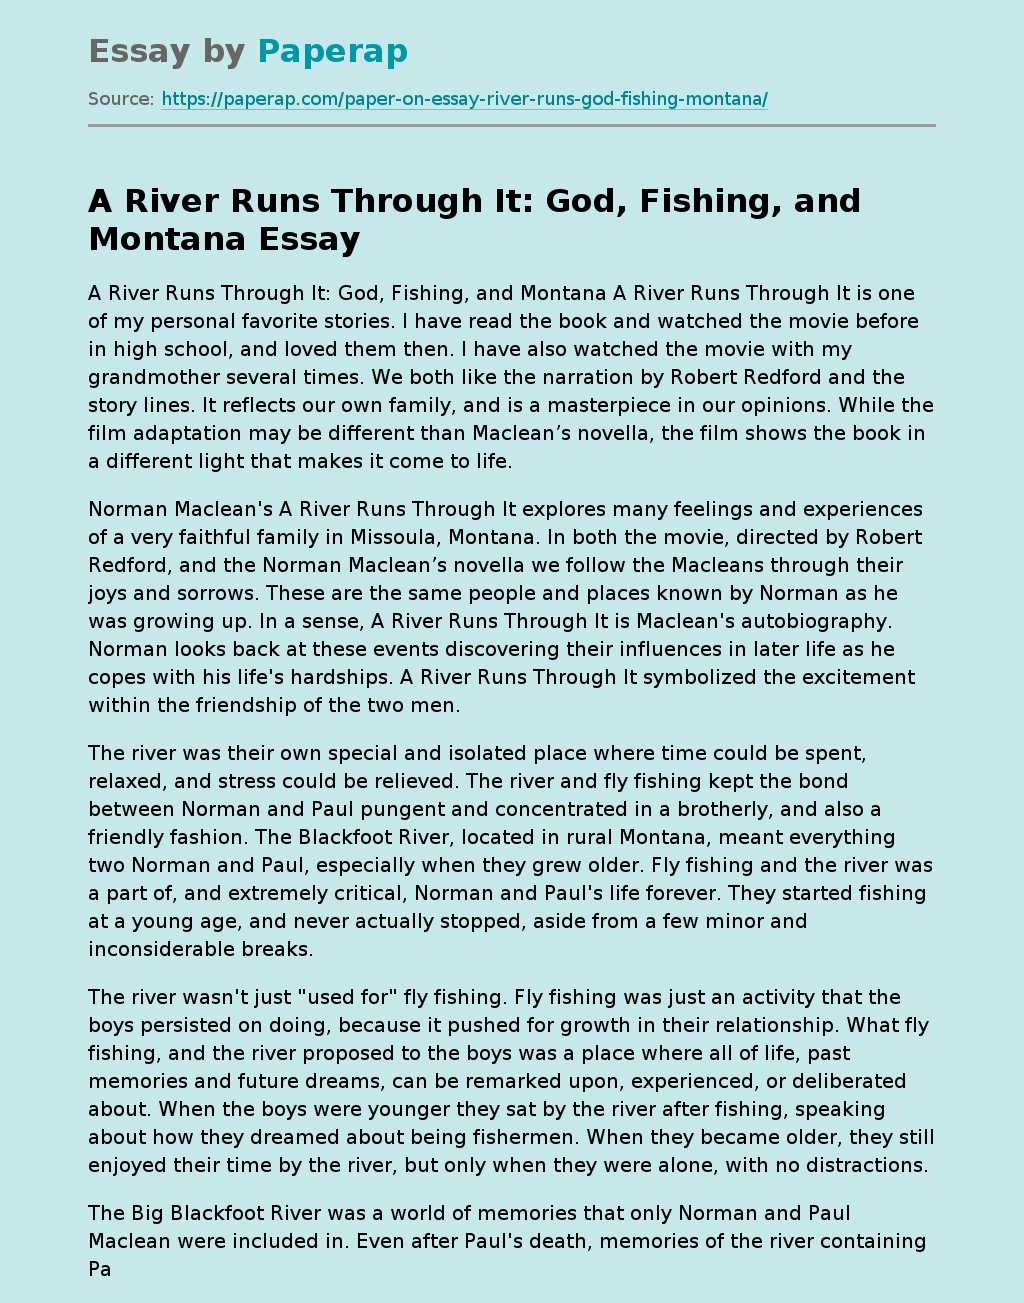 A River Runs Through It: God, Fishing, and Montana